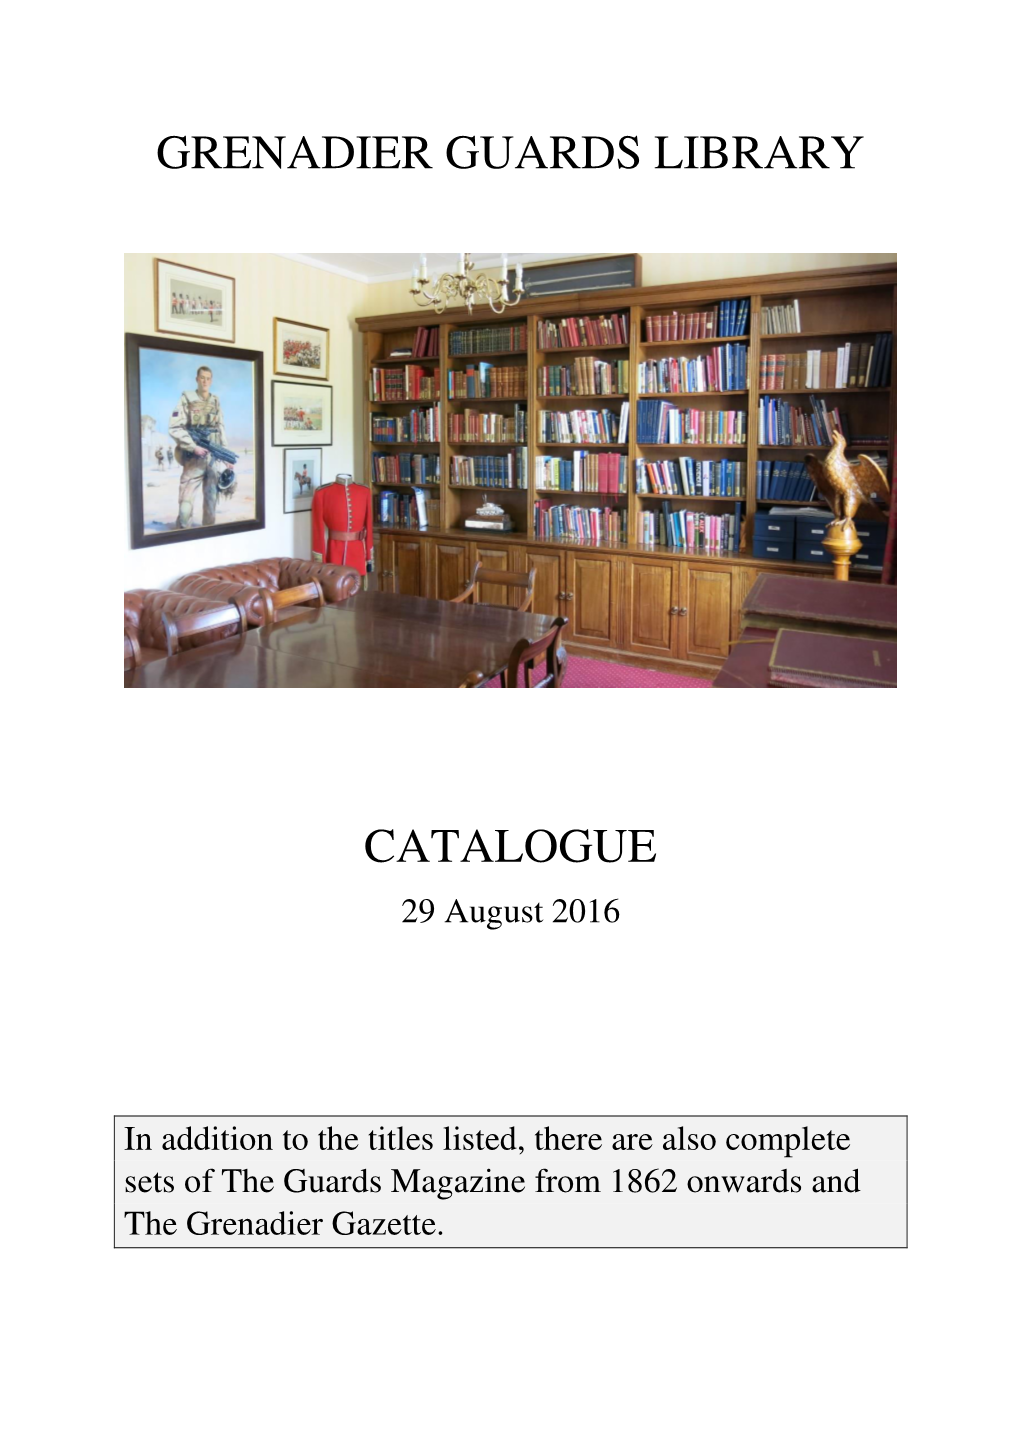 Grenadier Guards Library Catalogue